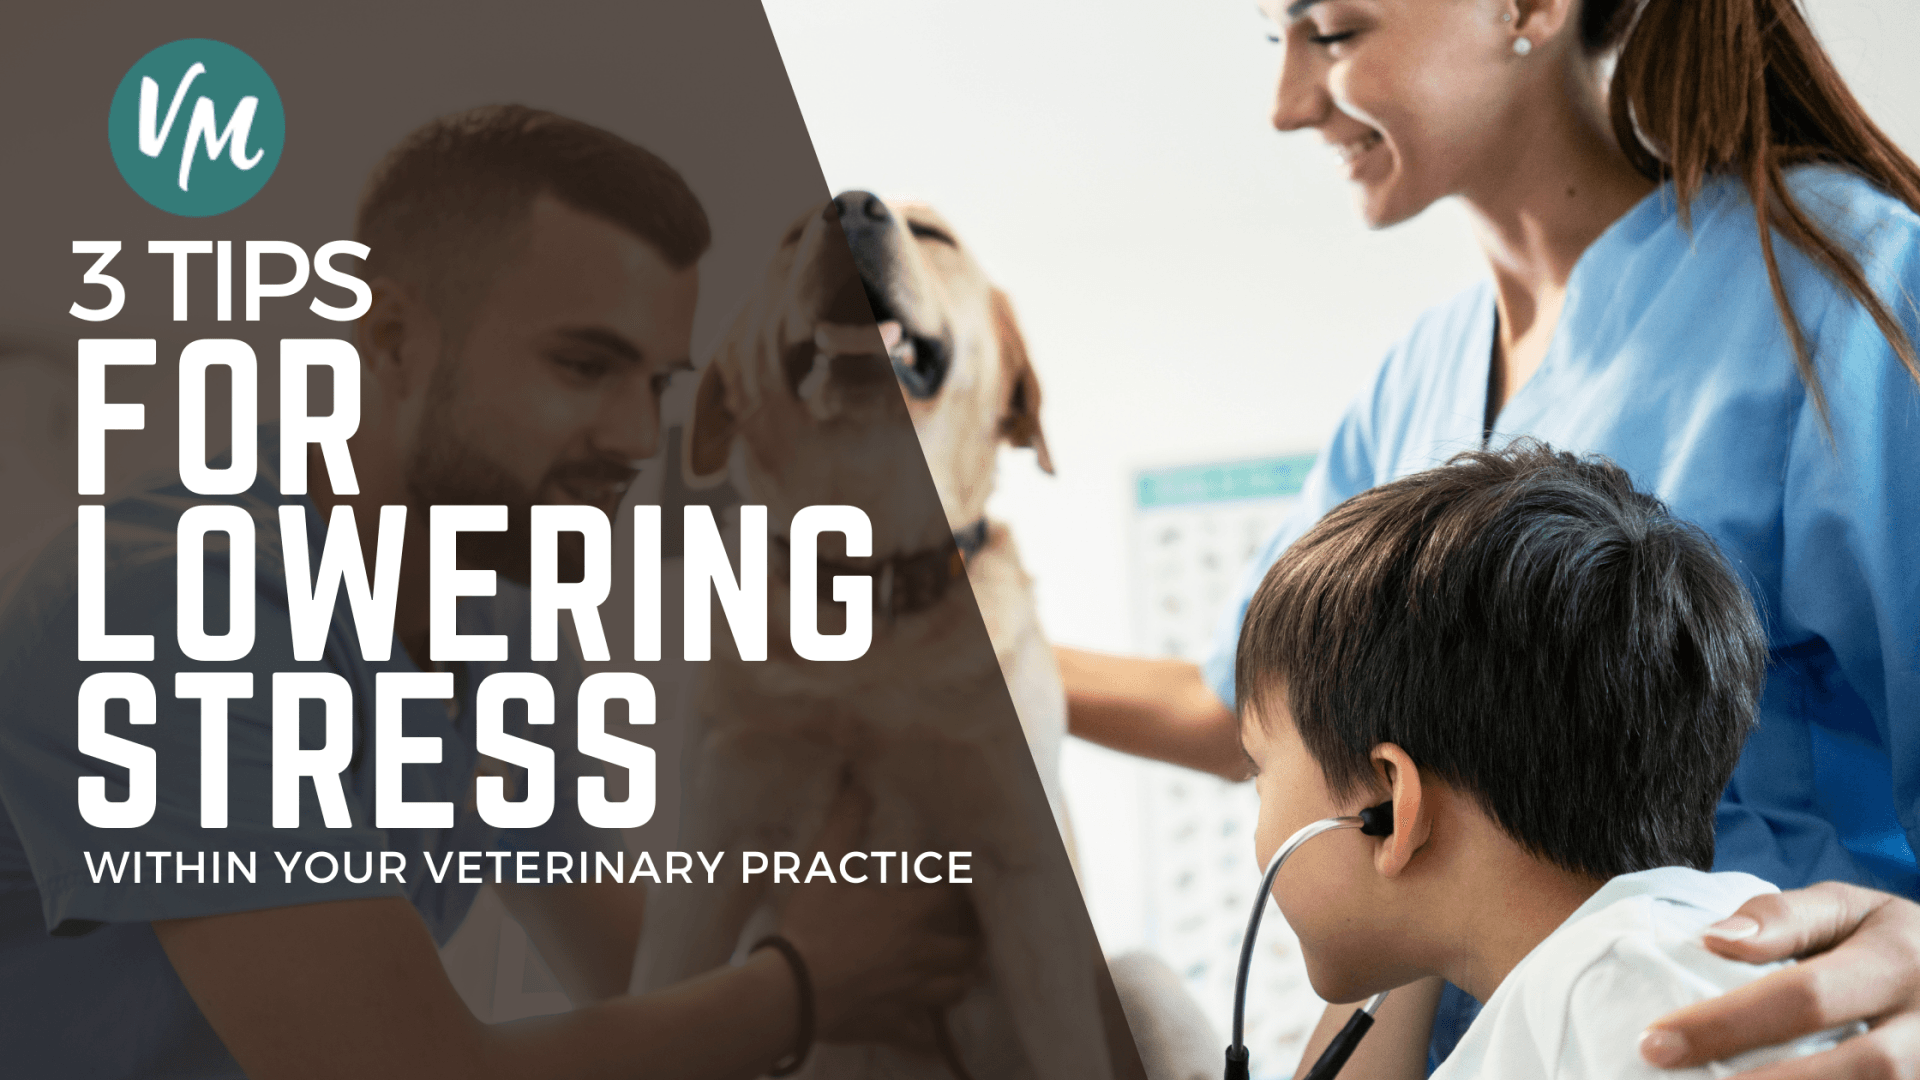 Lowering Stress in Veterinary Practice